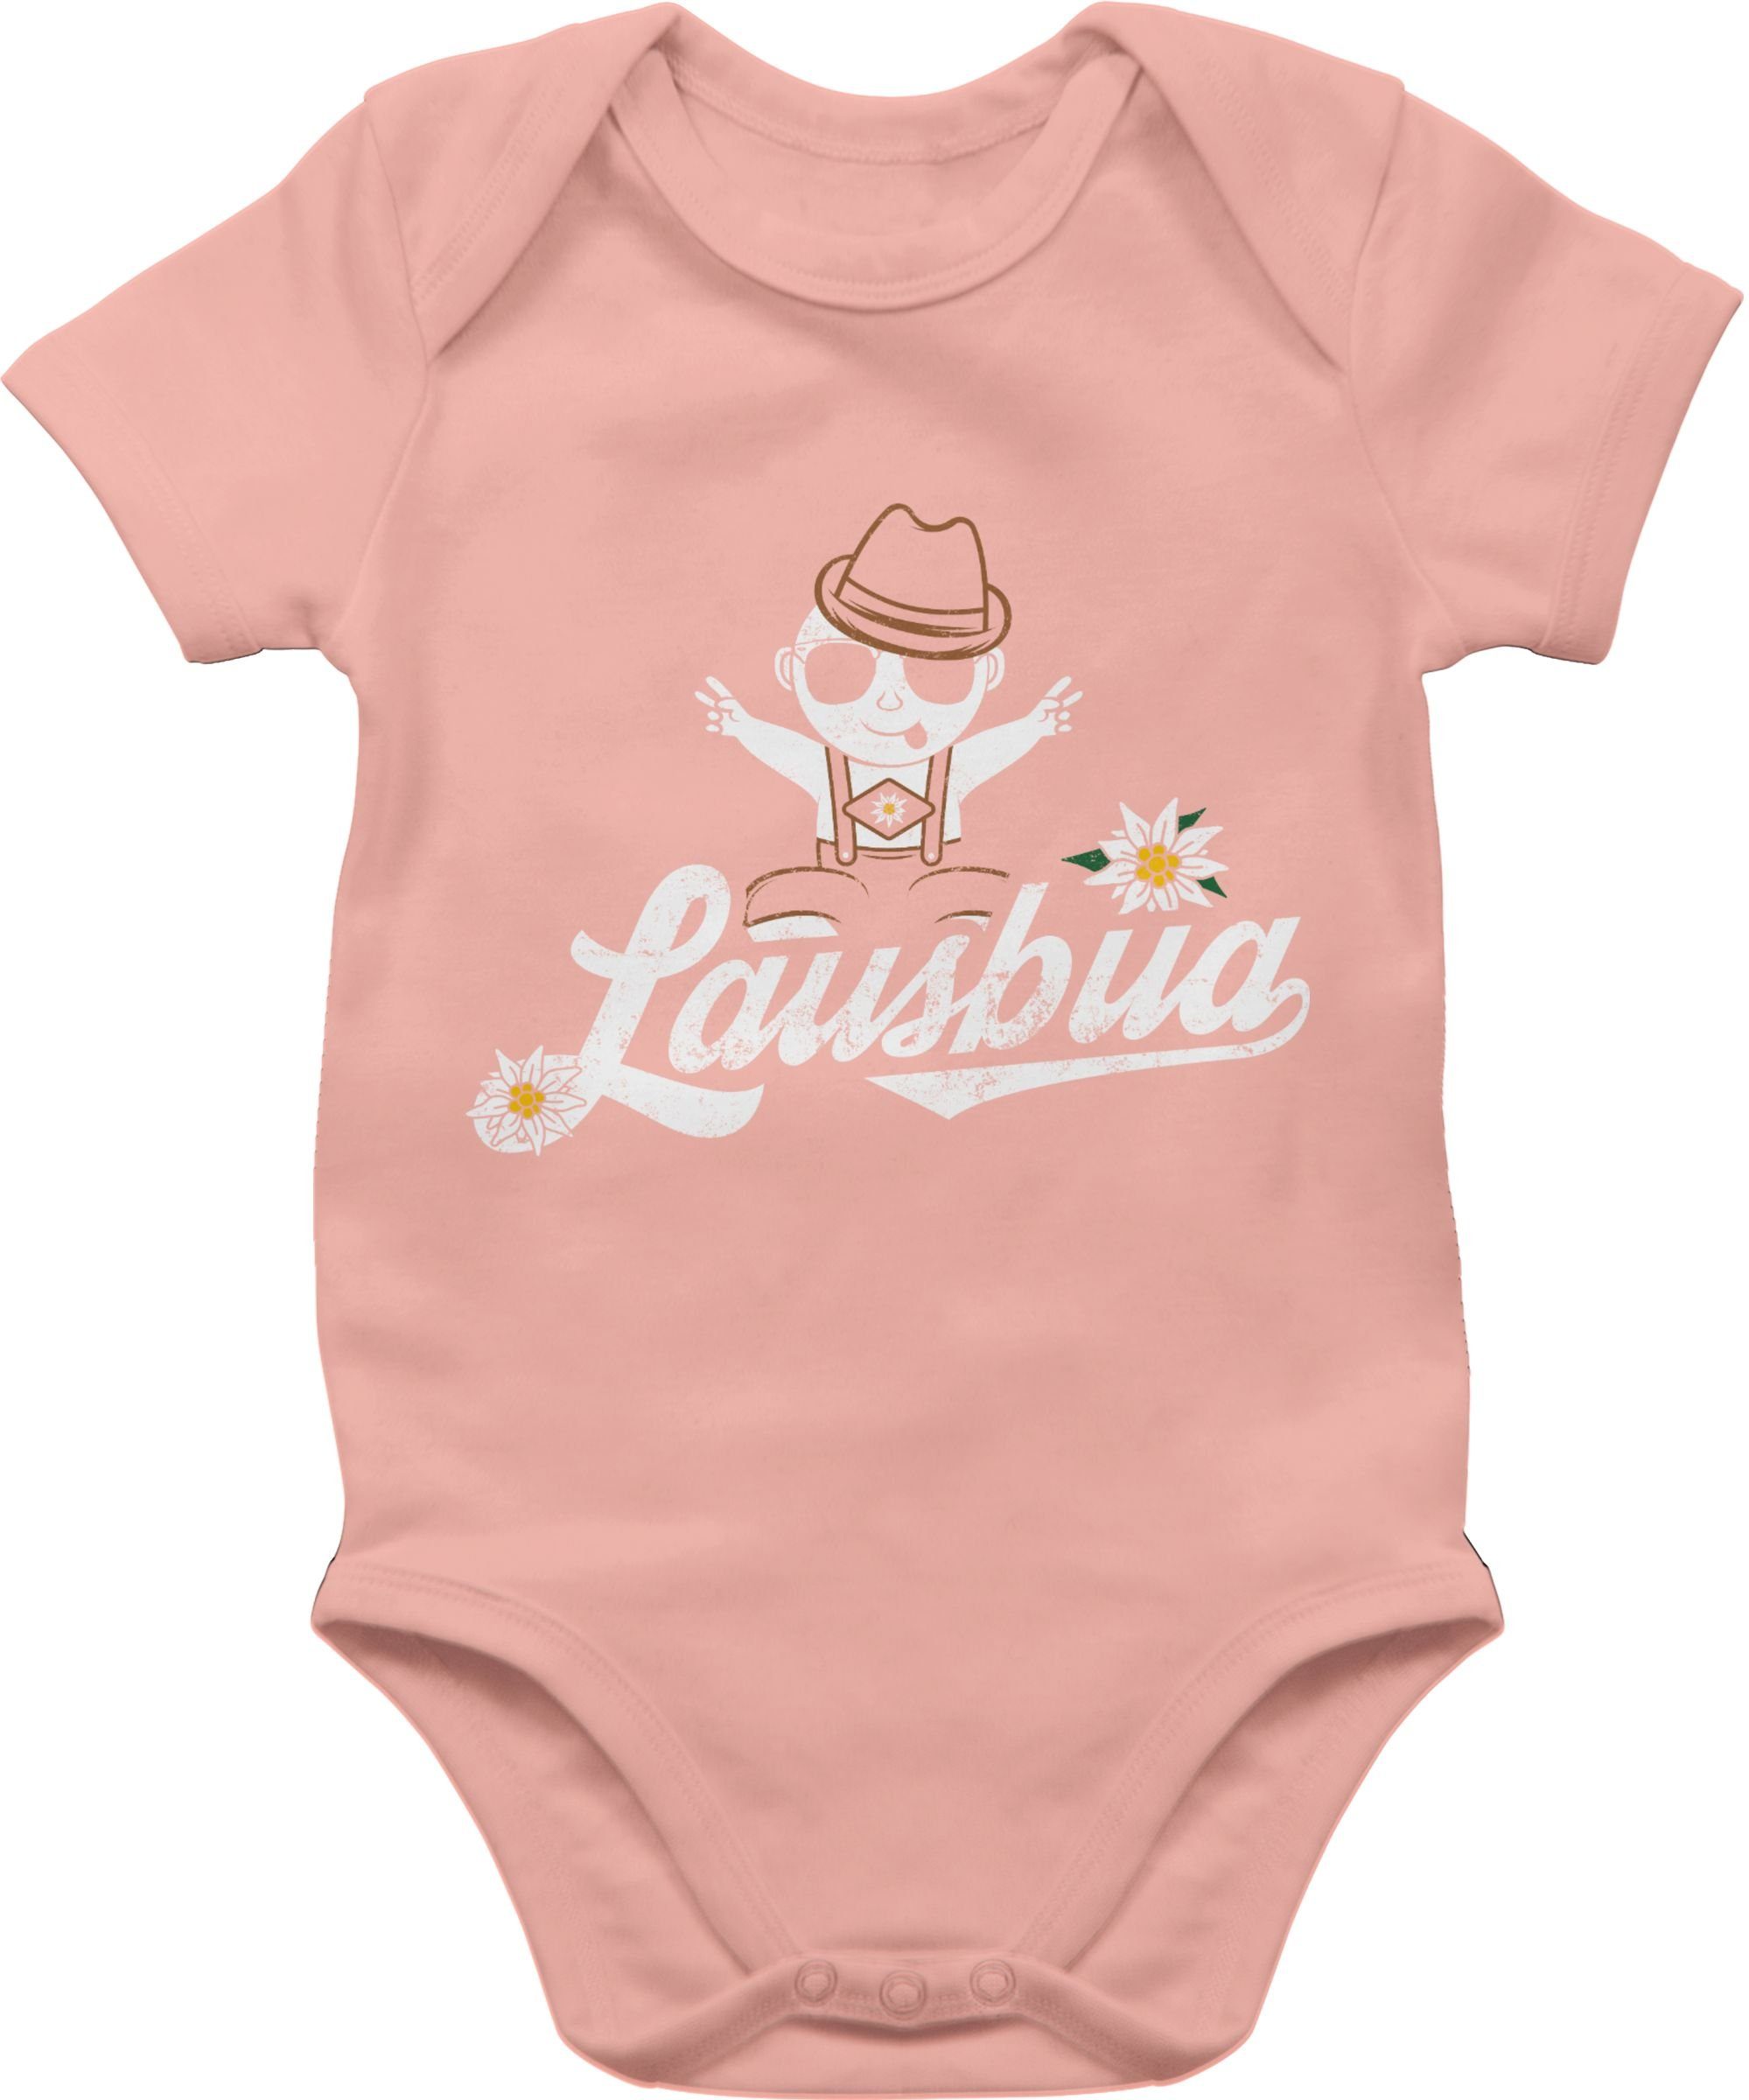 I Oktoberfest Lausbua Babyrosa 3 Outfit Witzig Baby Lustig Shirtbody Baby Shirtracer Mode für Wiesn